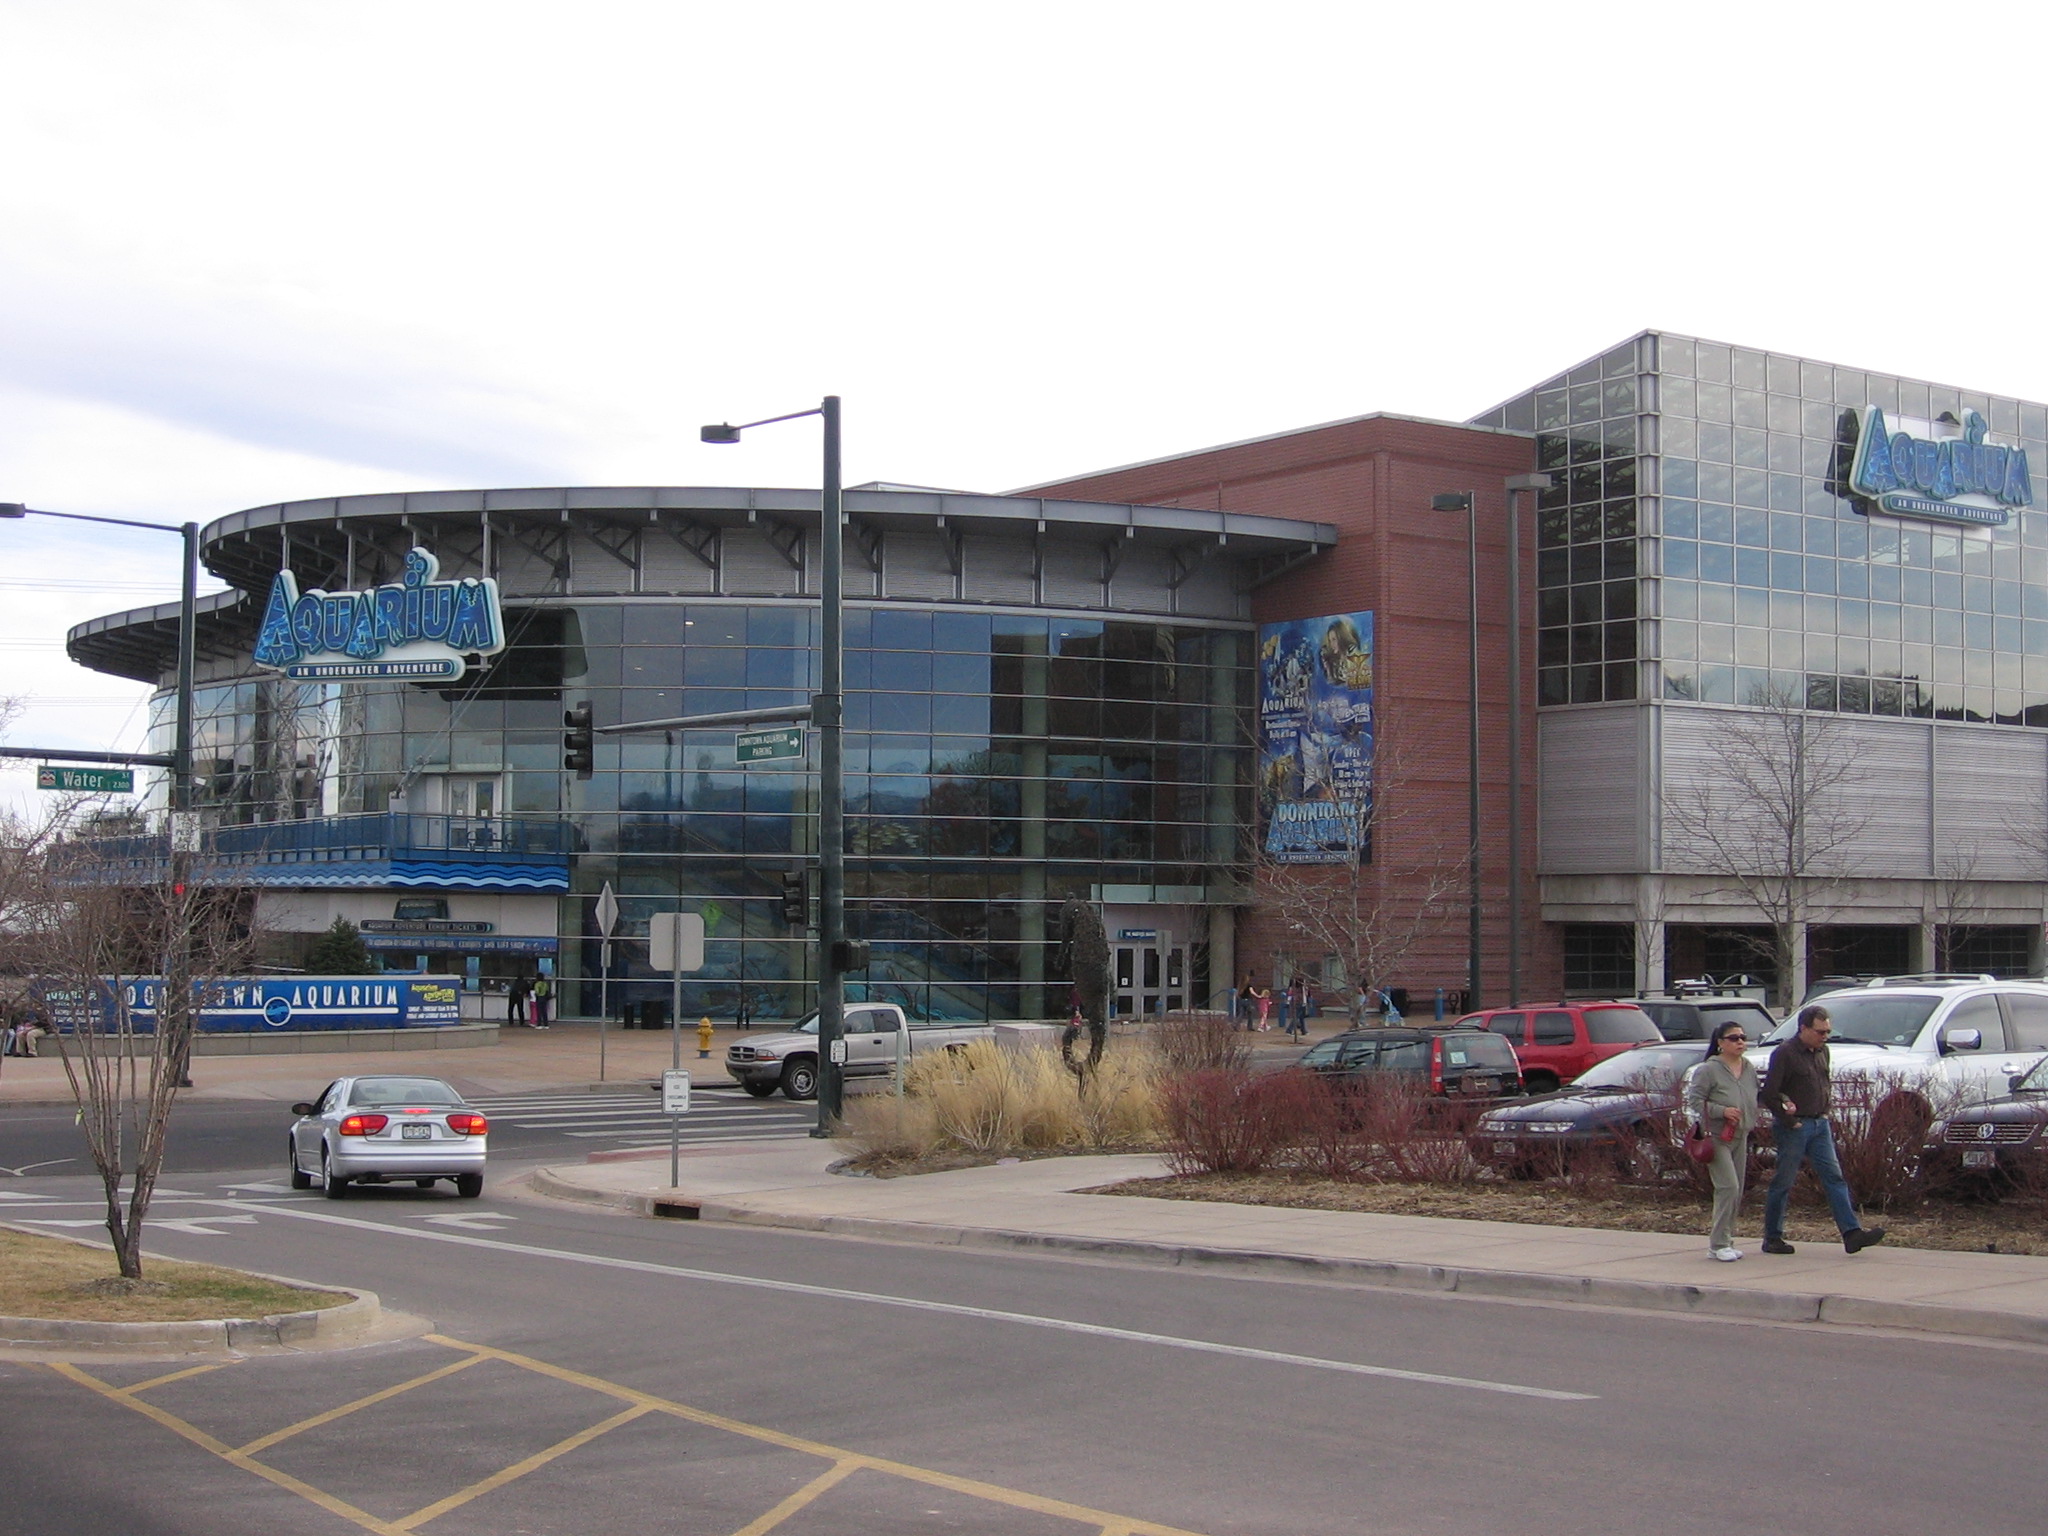 Exterior view of the Denver Downtown Aquarium from the parking lot in Denver, Colorado